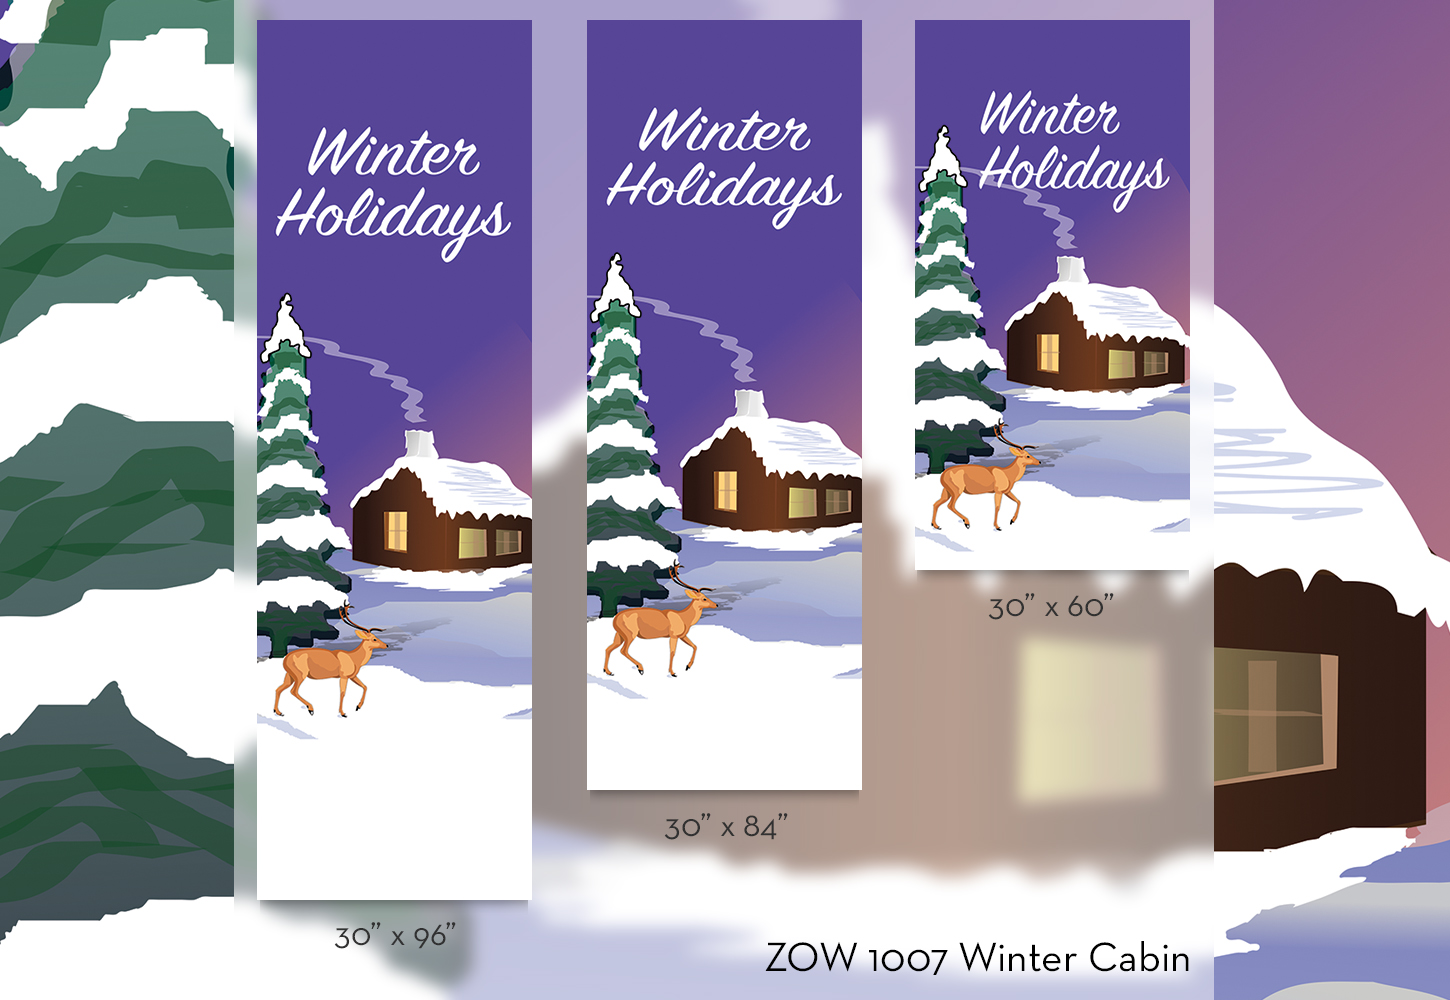 ZOW 1007 Winter Cabin